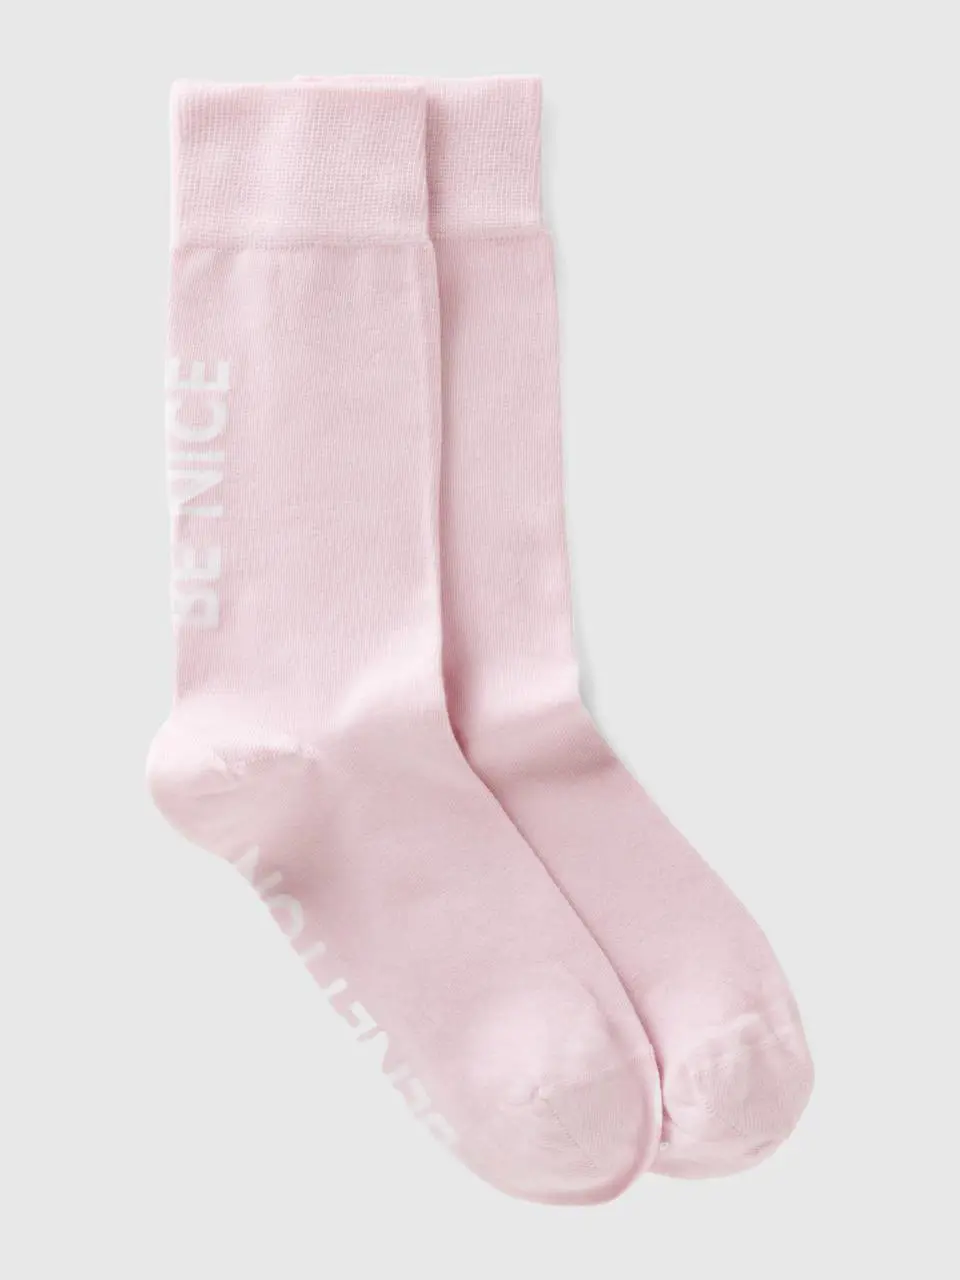 Benetton light pink "be nice" socks. 1